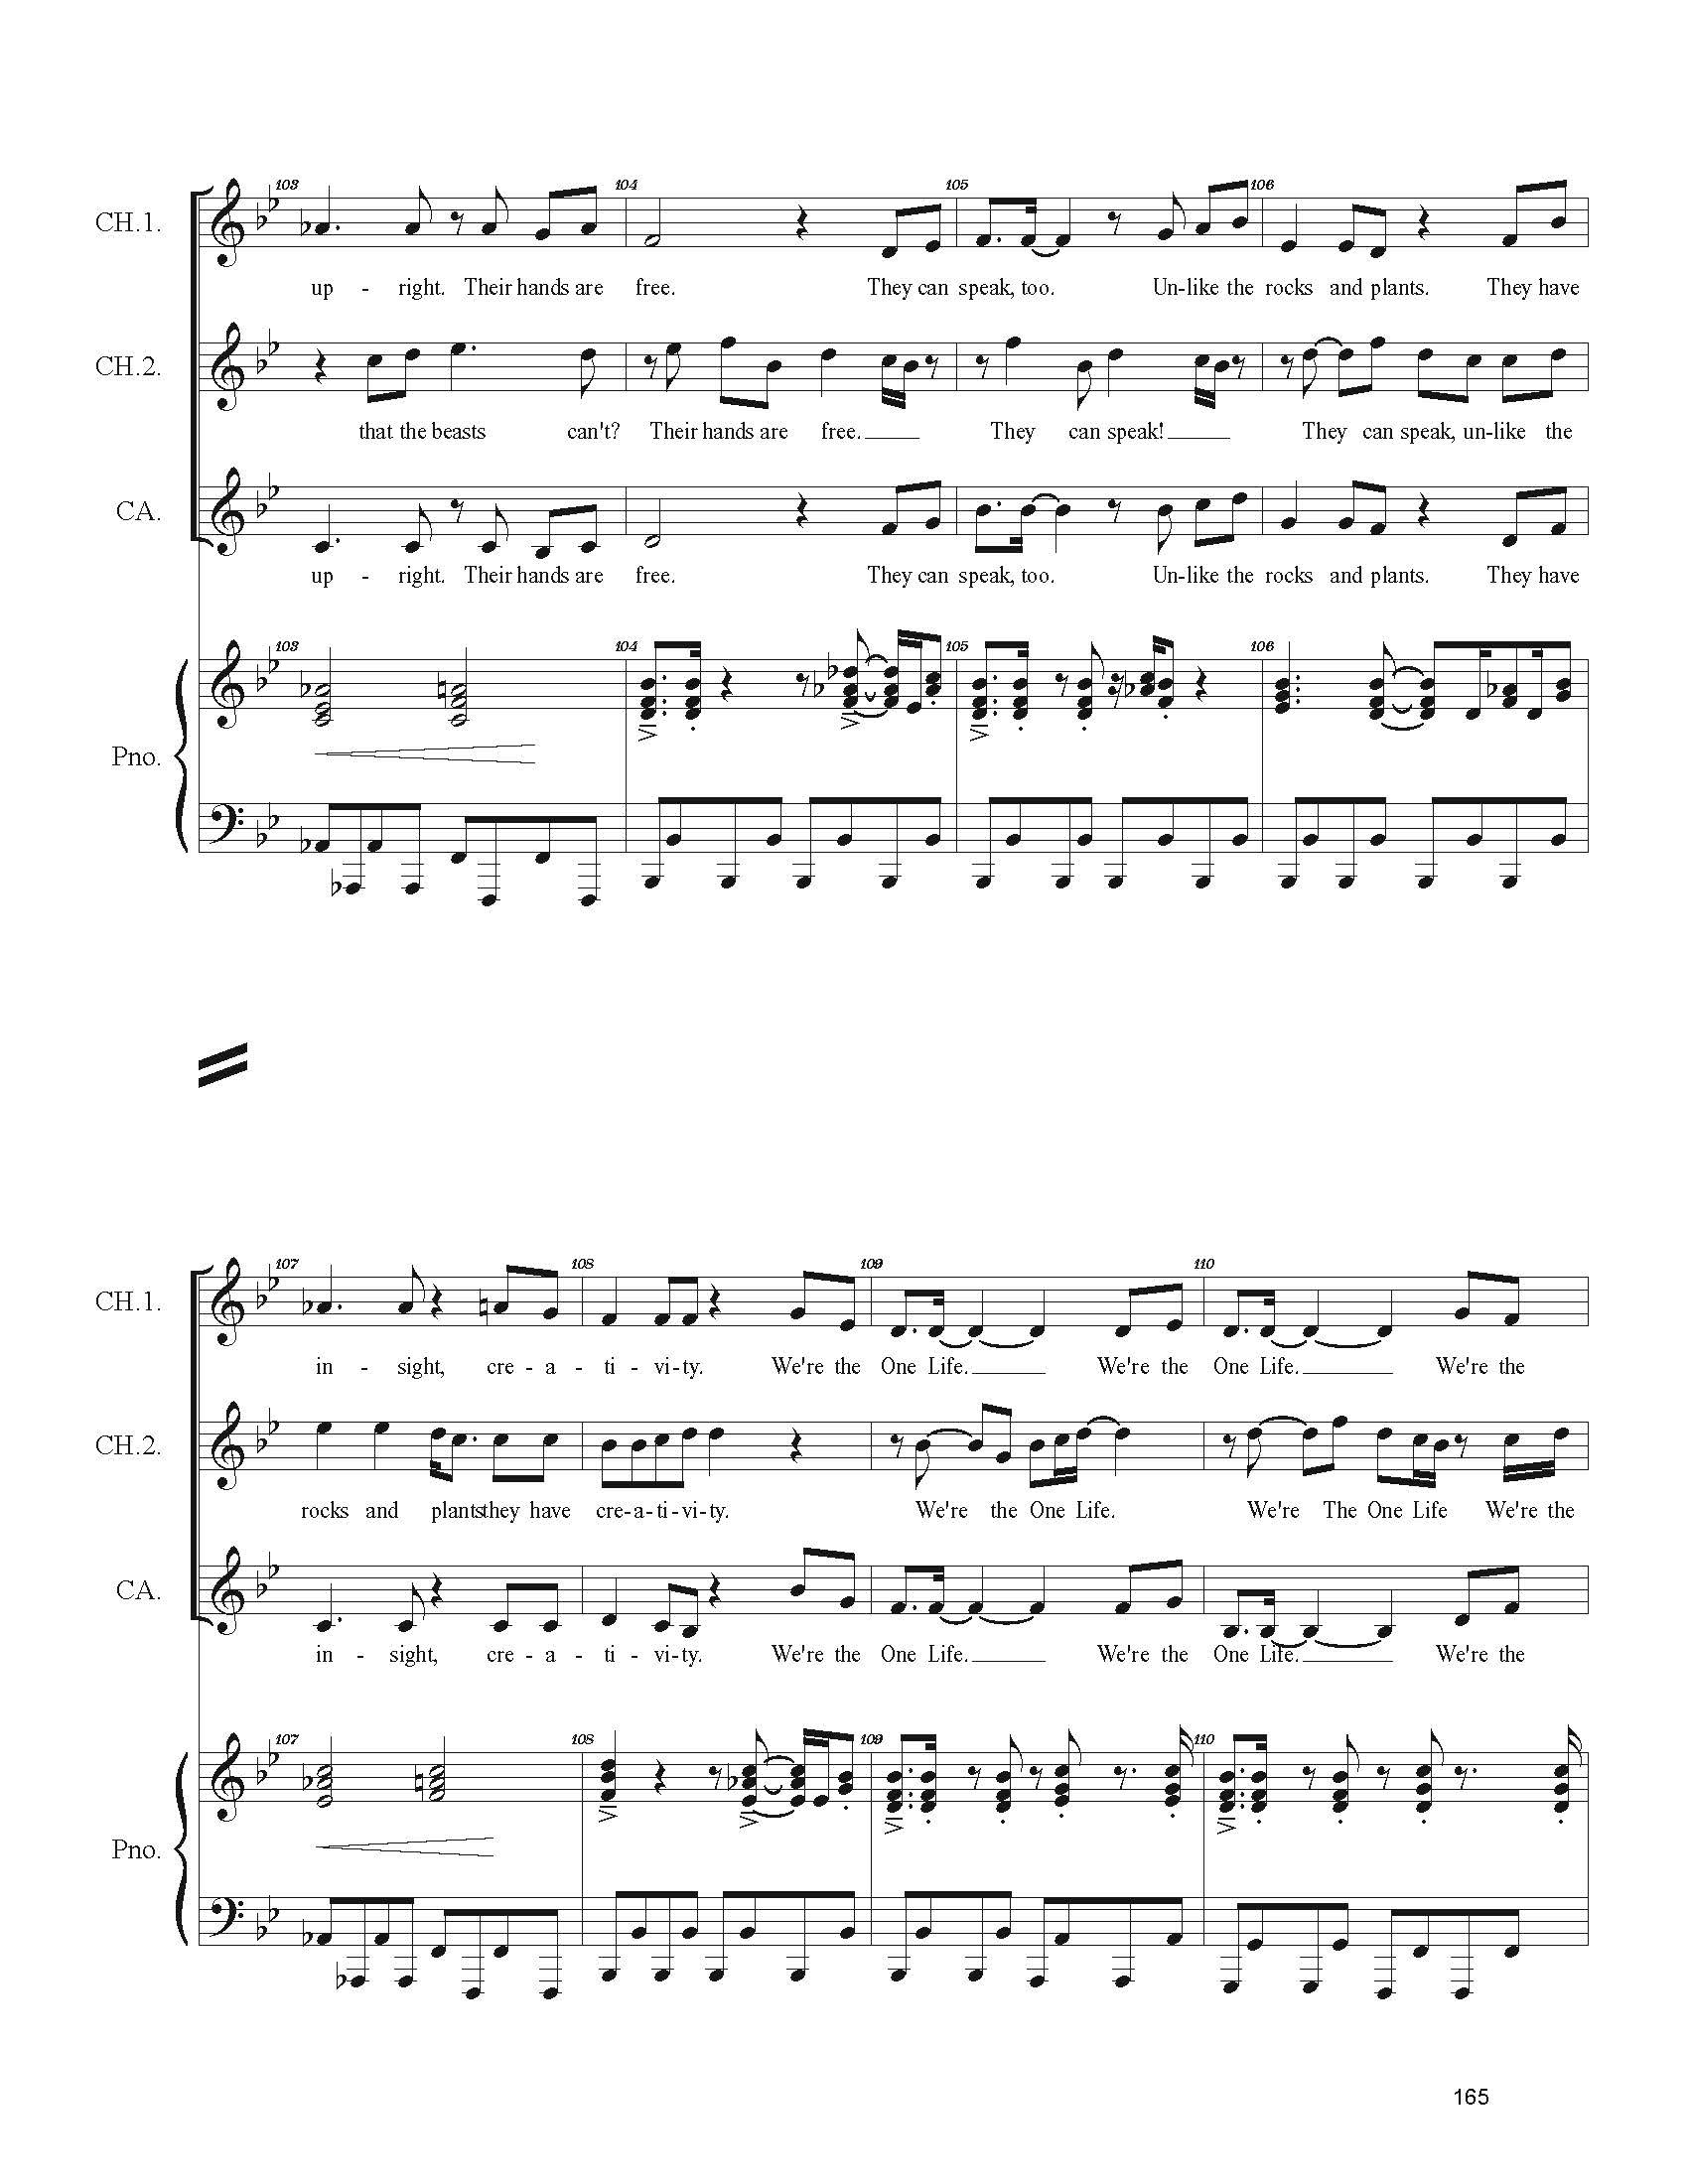 FULL PIANO VOCAL SCORE DRAFT 1 - Score_Page_165.jpg